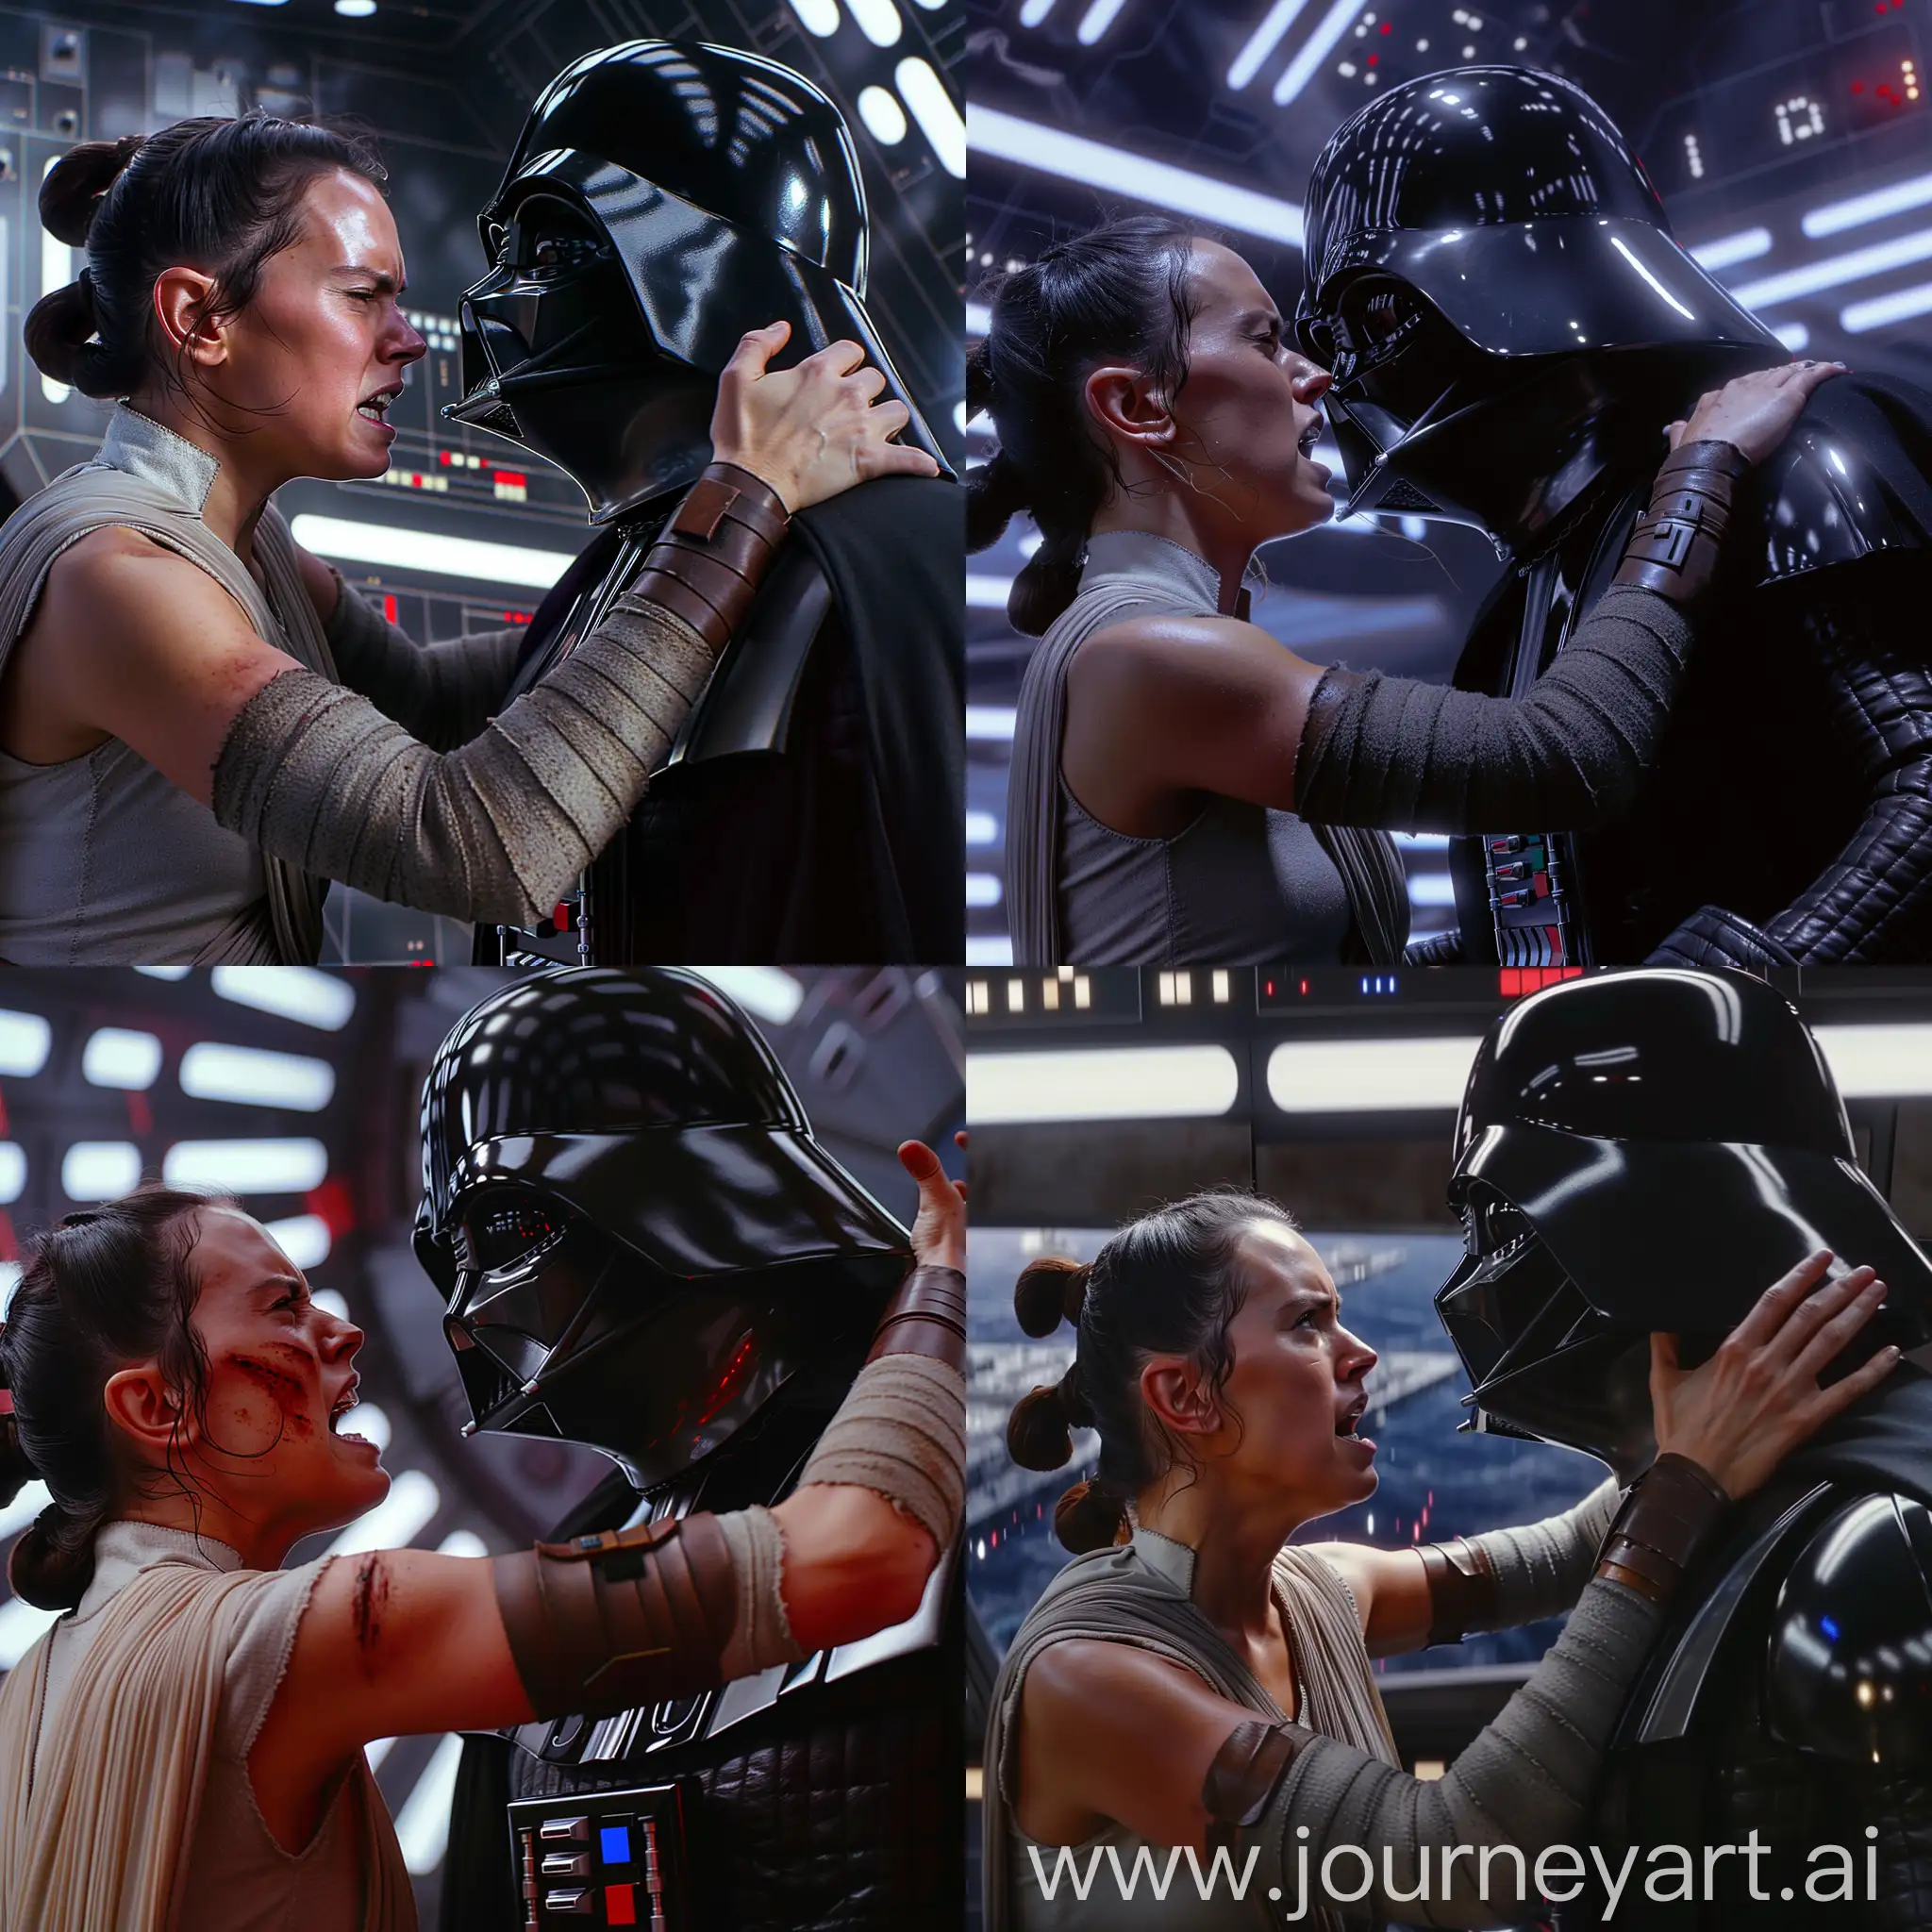 Intense-Encounter-Rey-Skywalker-Confronts-Darth-Vader-in-HyperRealistic-Star-Wars-Image